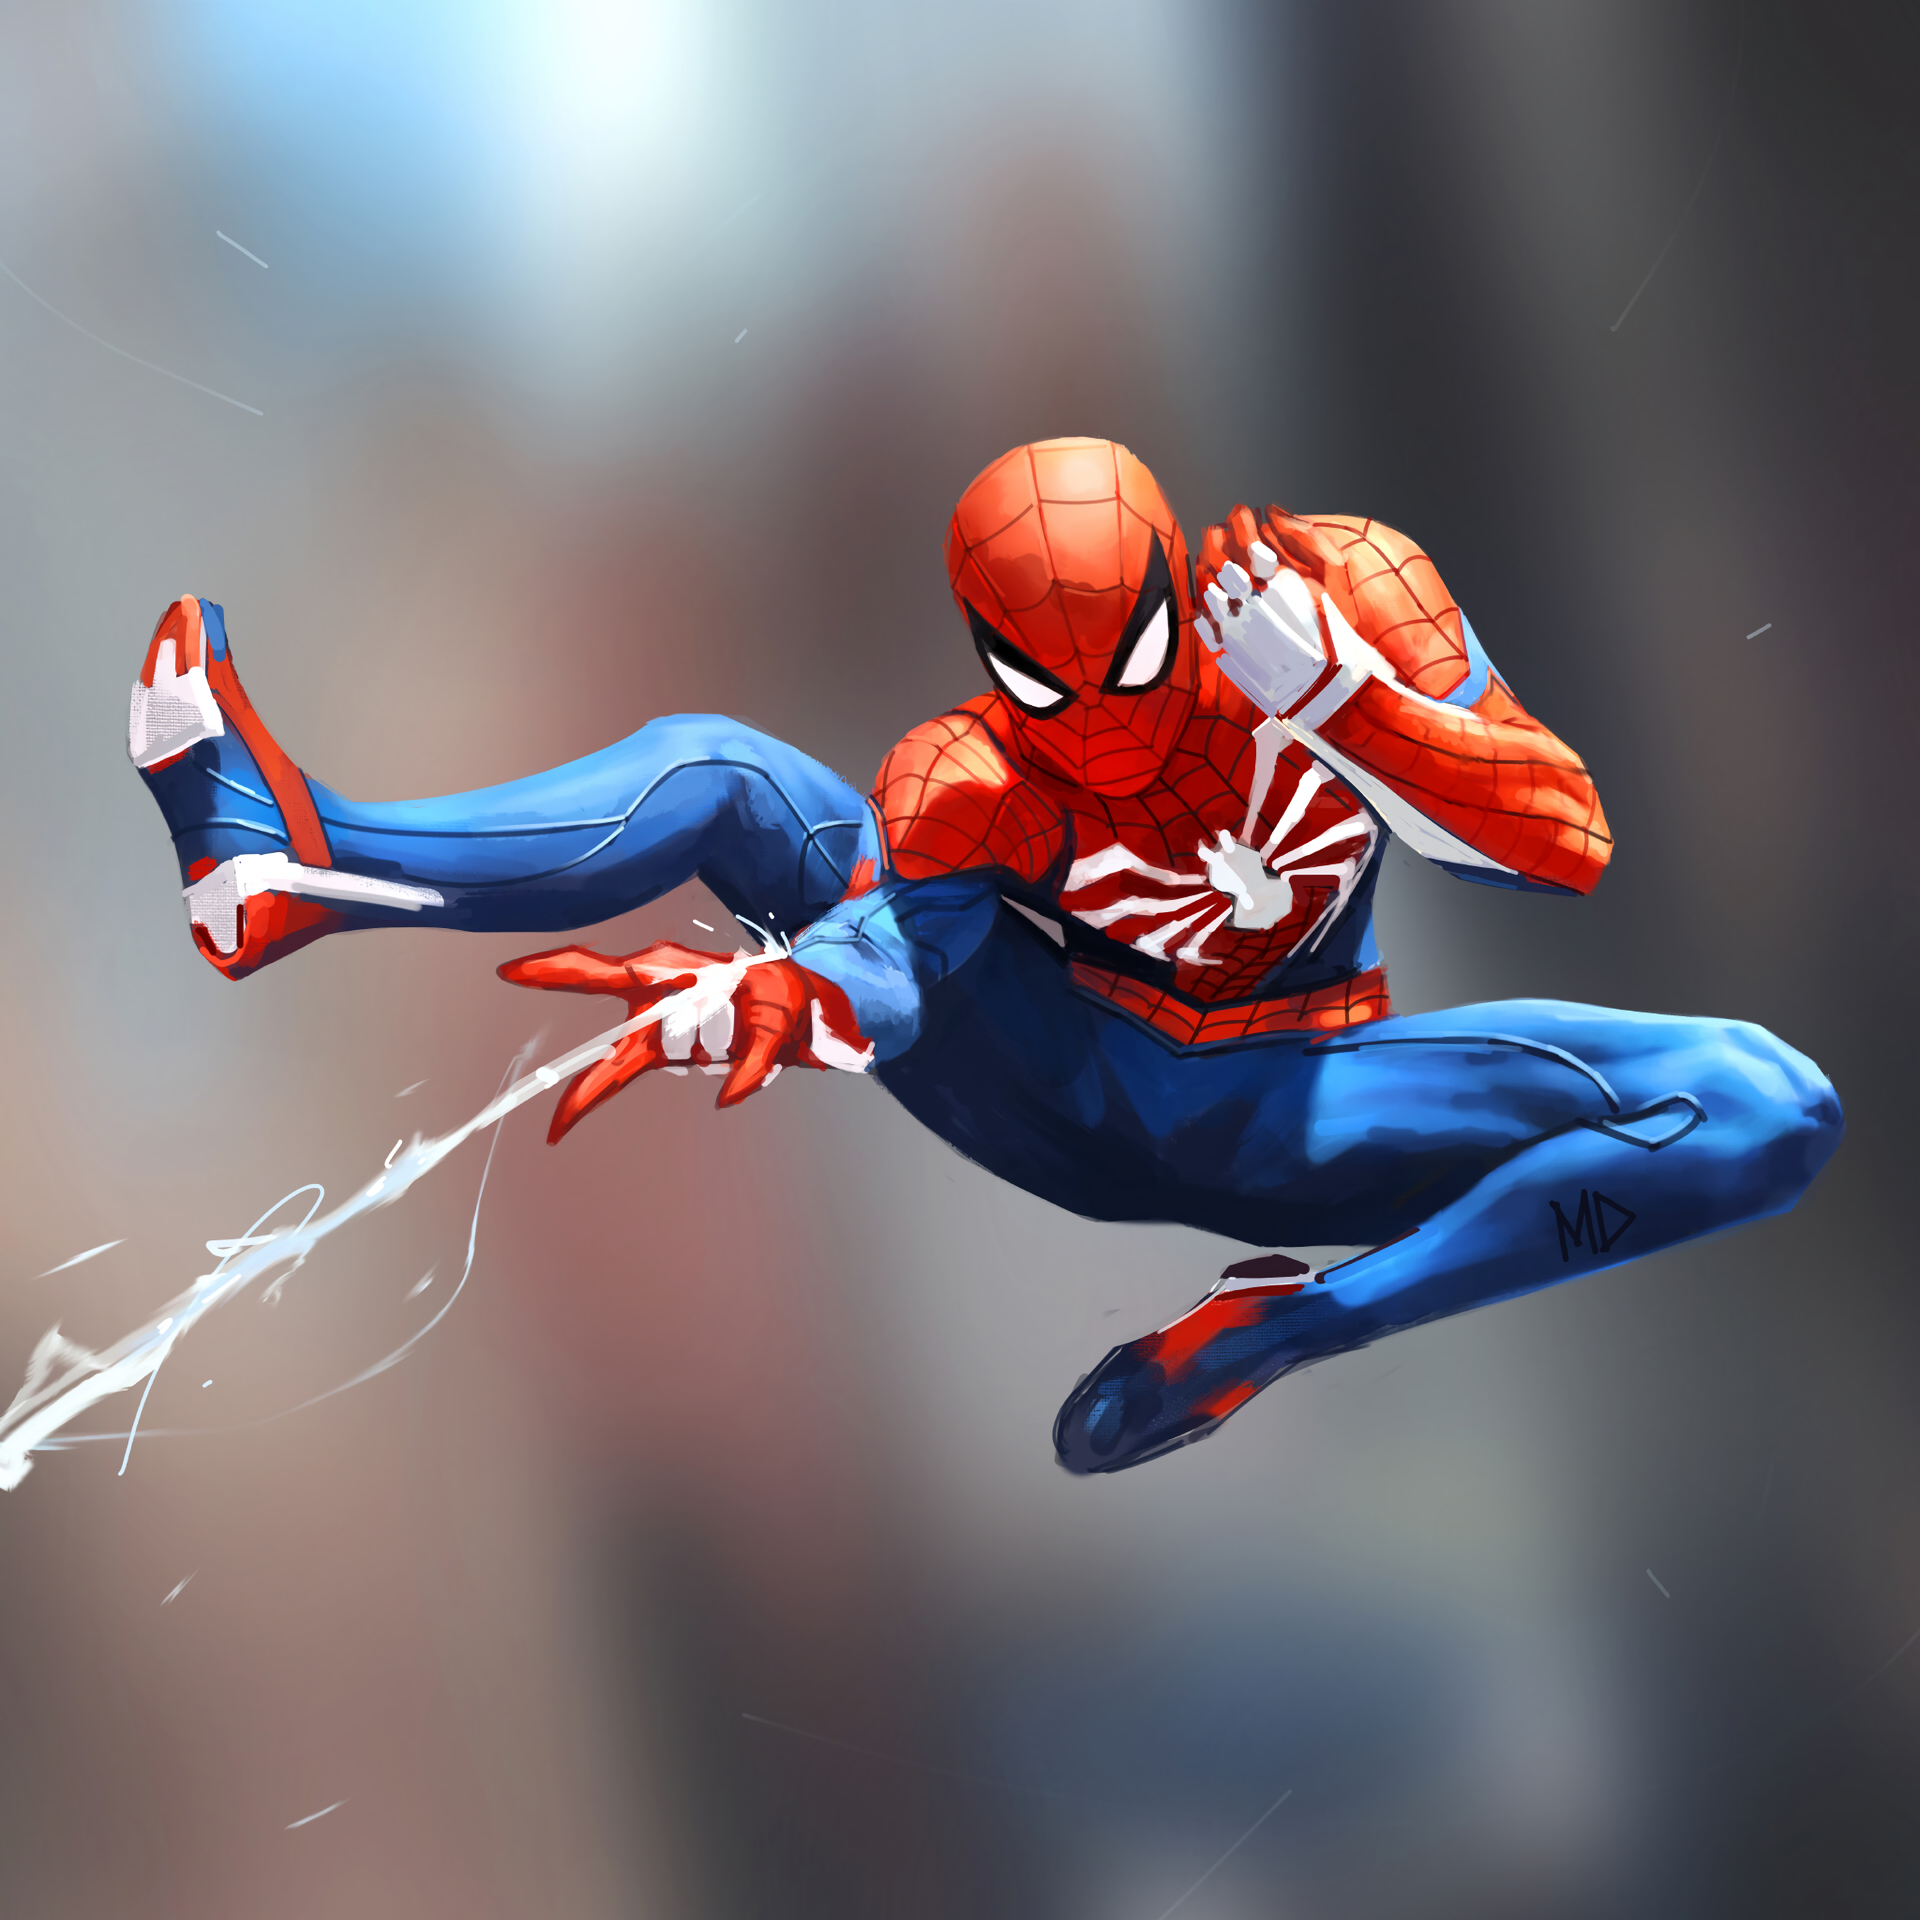 General 1920x1920 Spider-Man spiderwebs artwork digital art Marvel Comics fan art men mask superhero